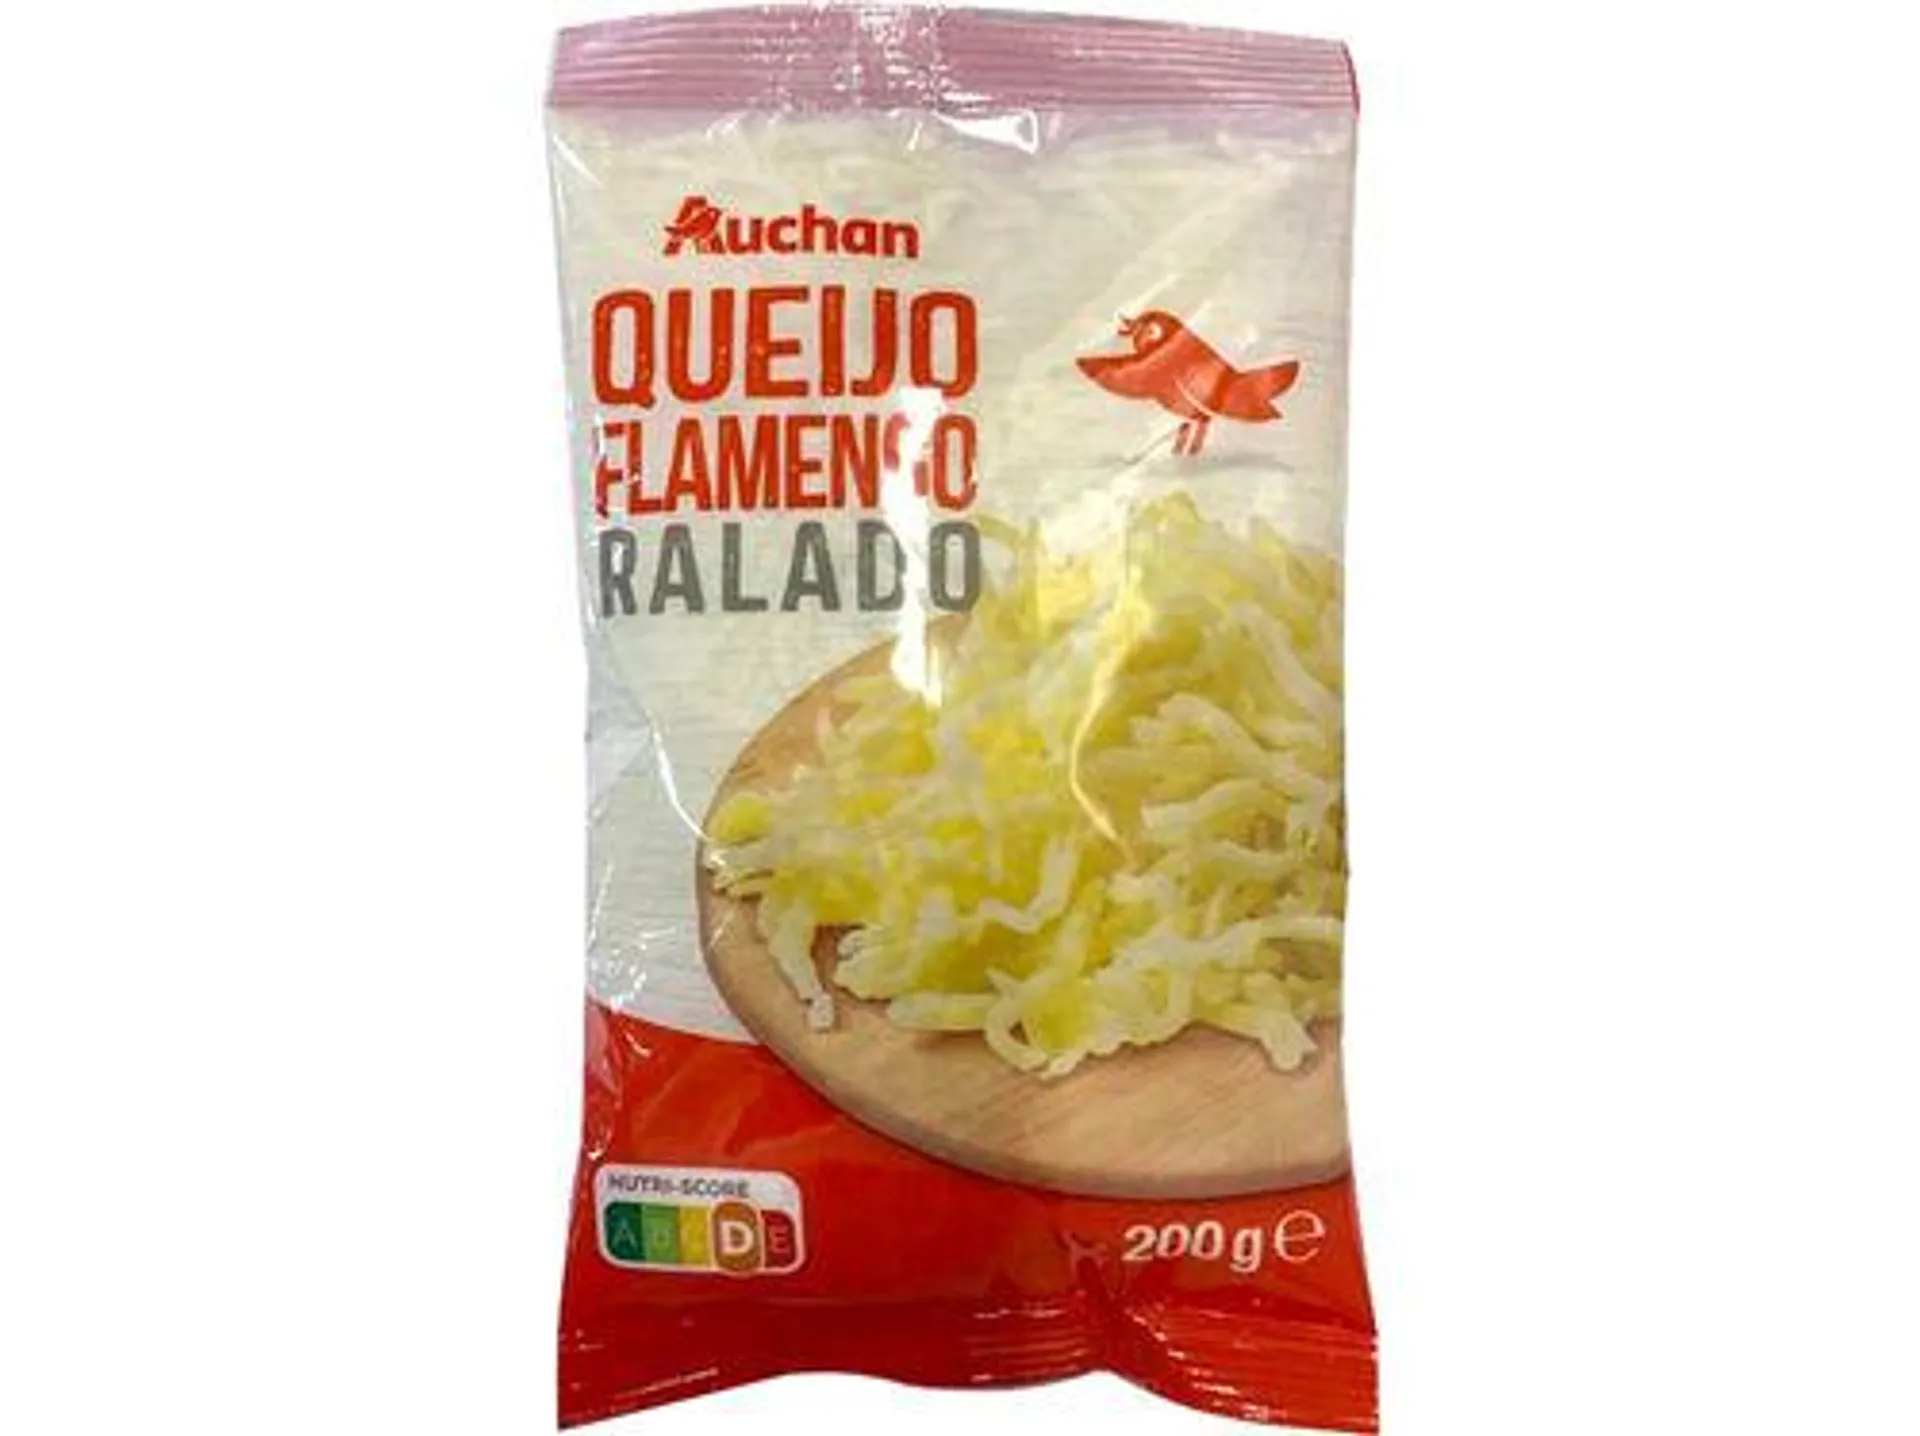 queijo flamengo auchan ralado 200g